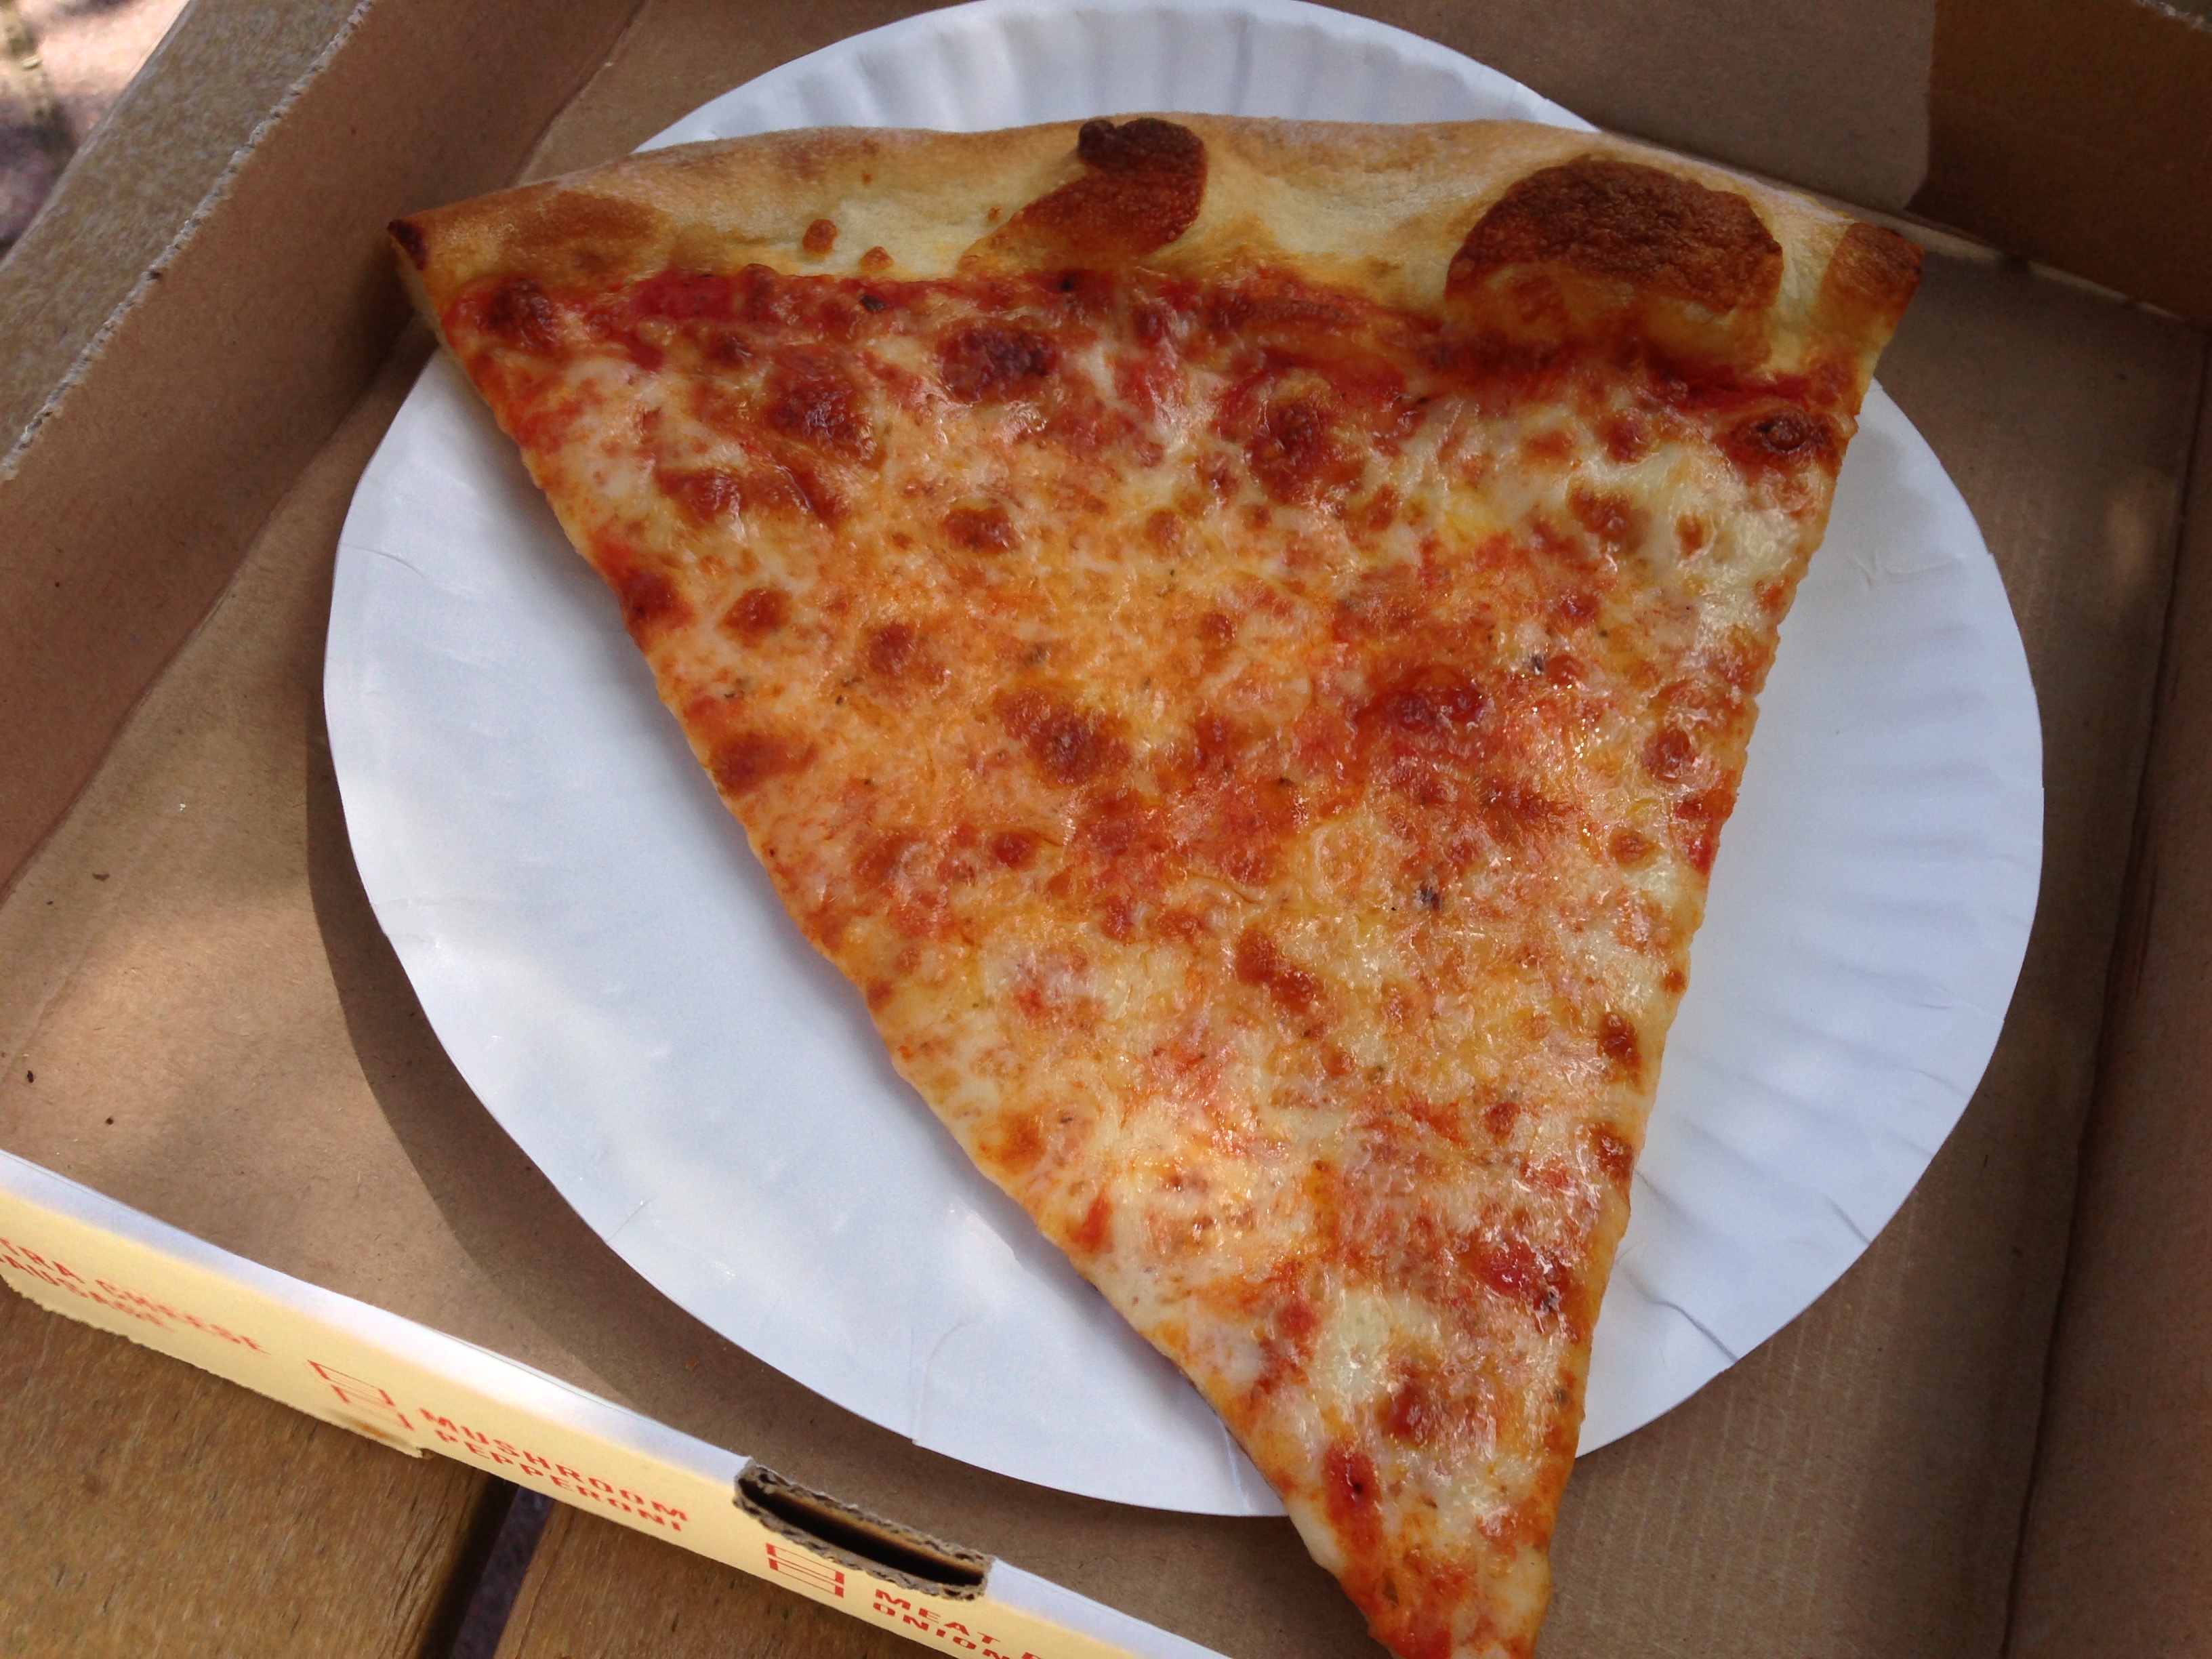 armando's pizzera in Fort lee NJ | Best Pizza Reviews